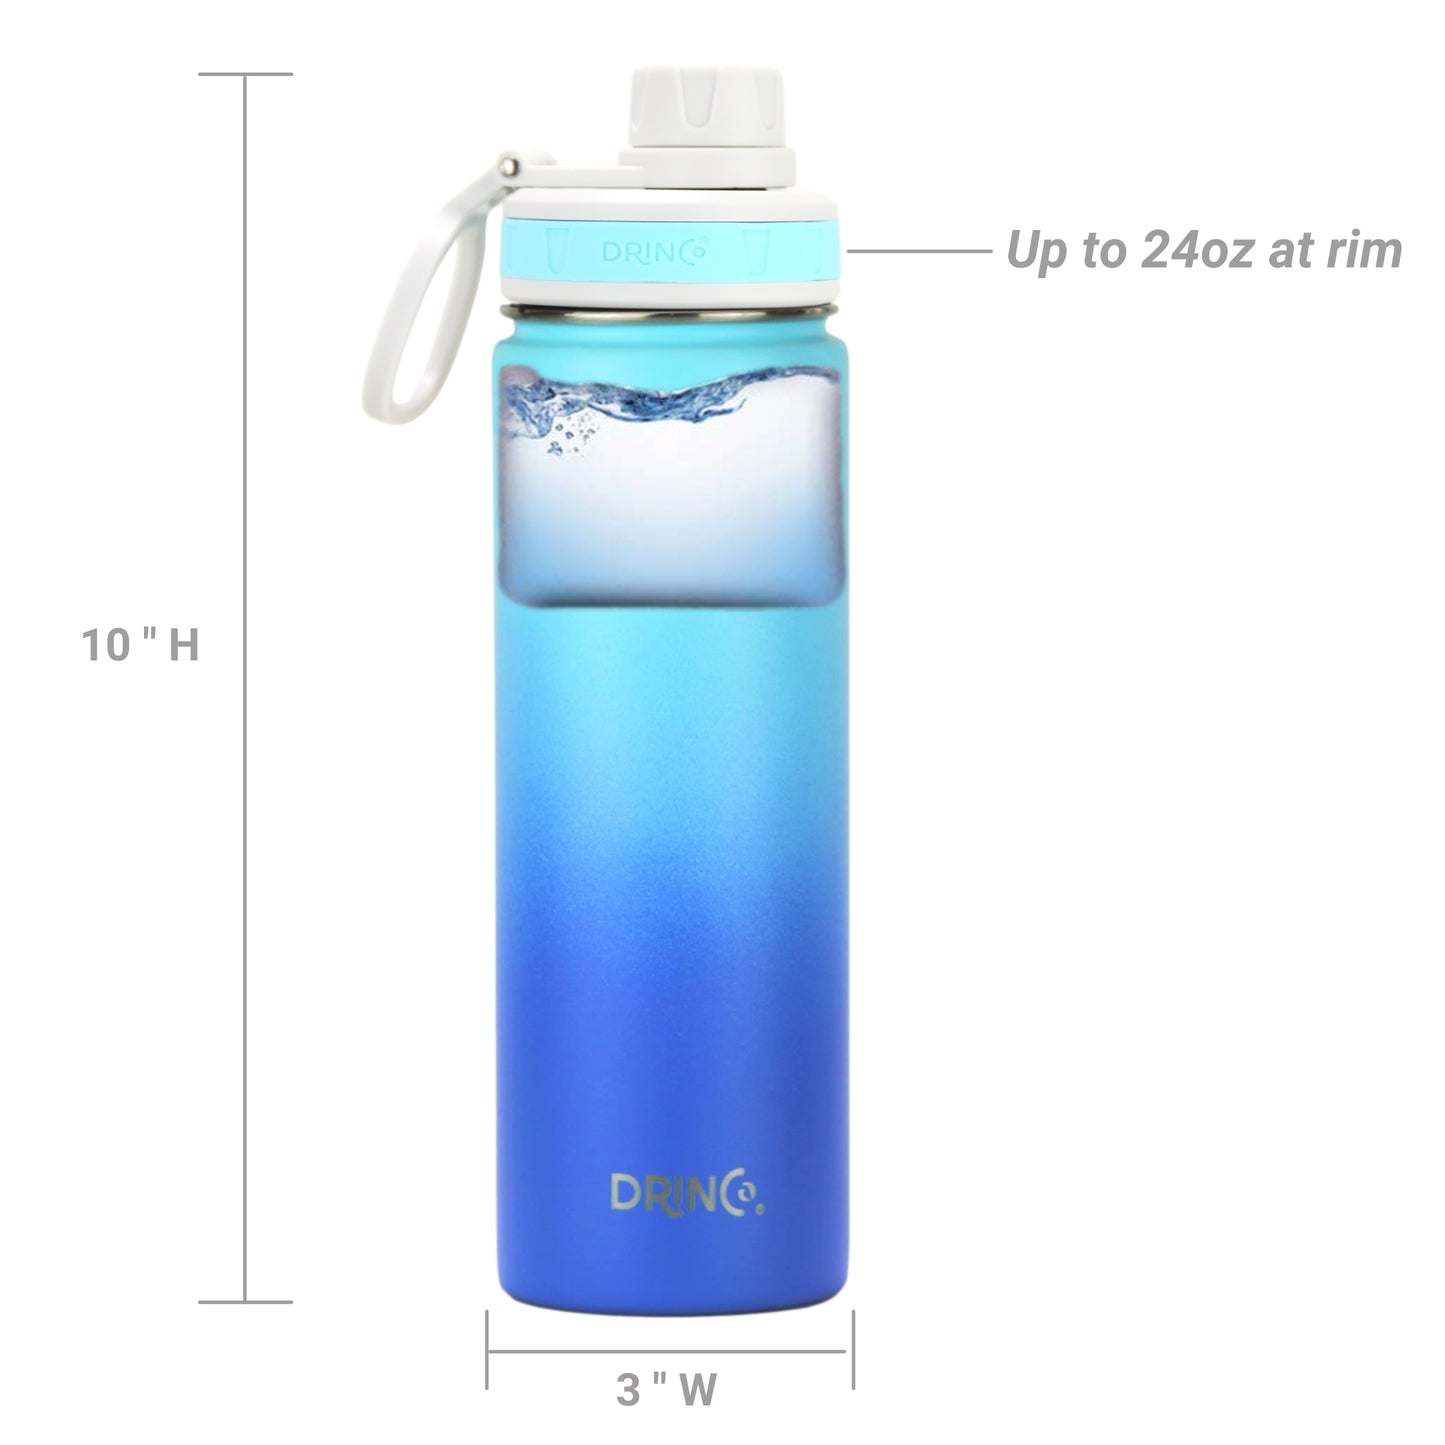 DRINCO® 22oz Stainless Steel Sport Water Bottle - Morning Sky Blue Axcestories